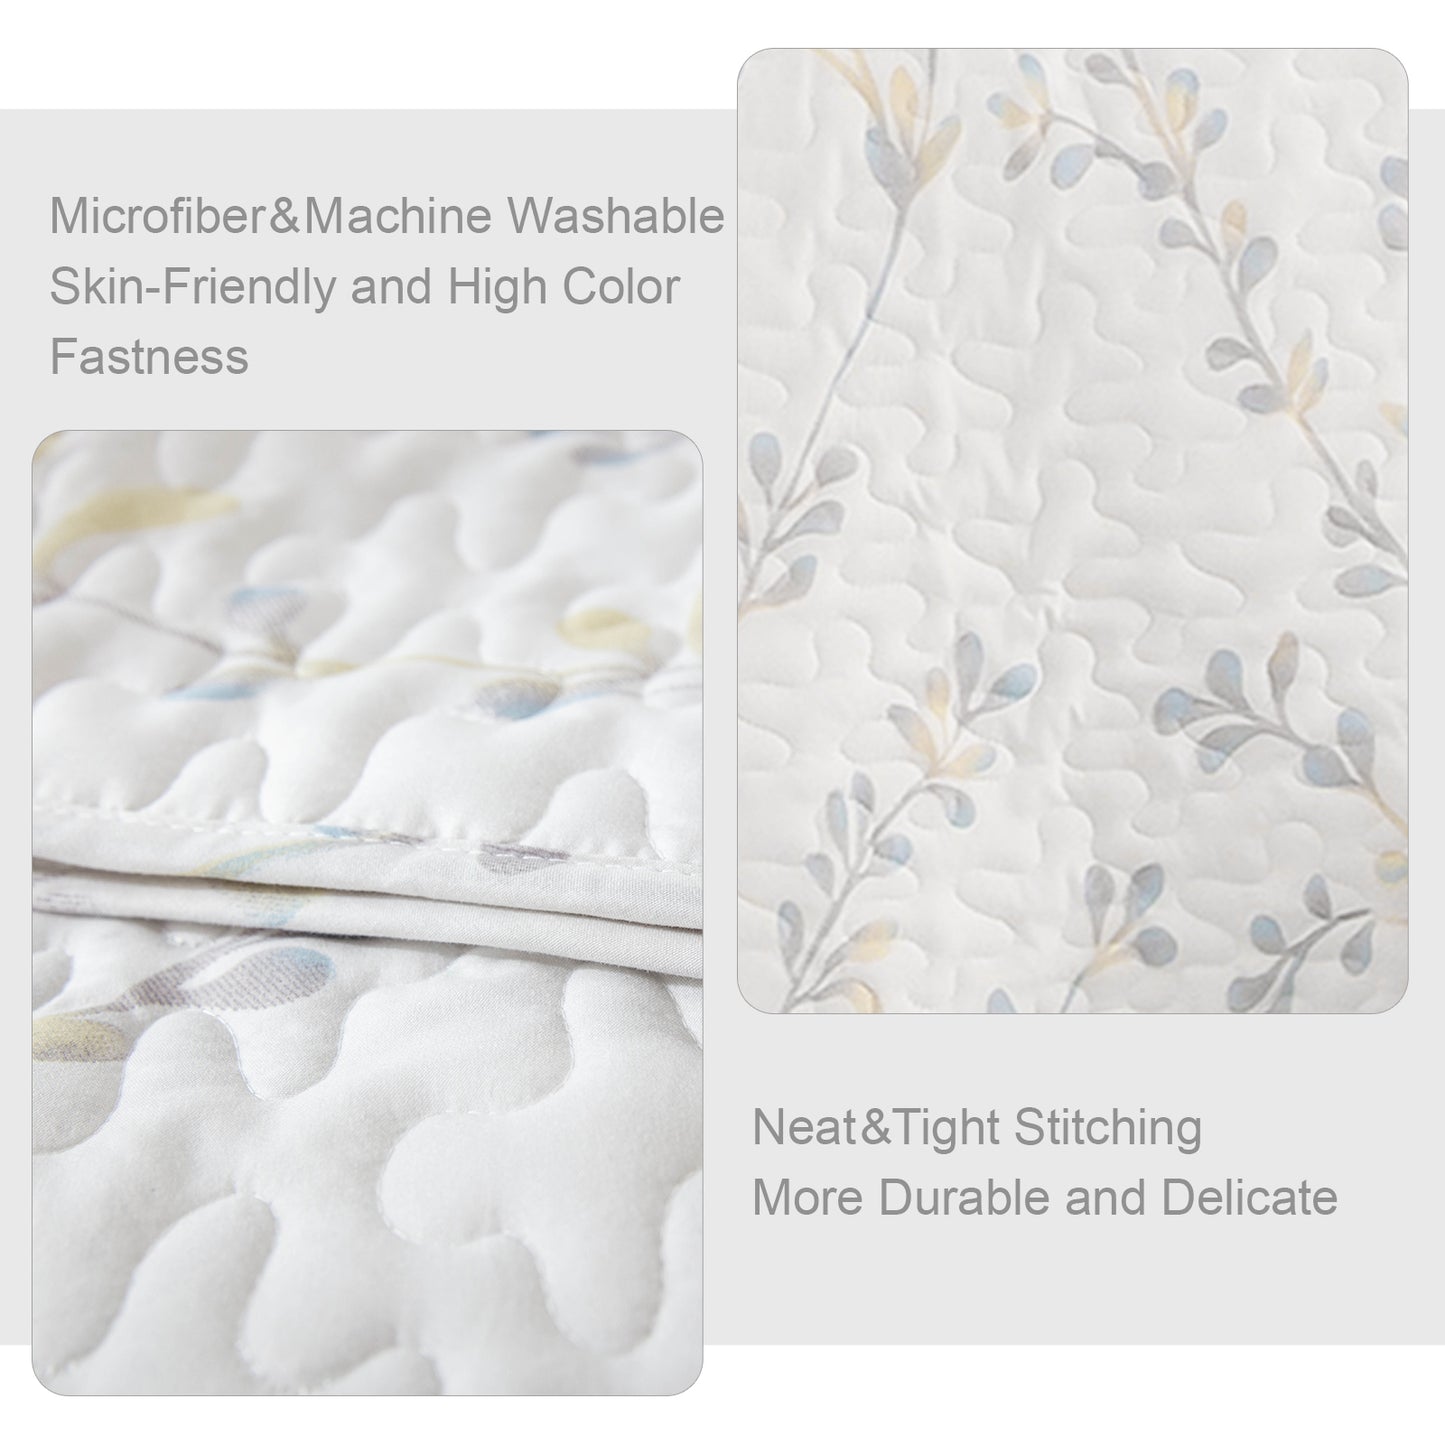 Exclusivo Mezcla Microfiber King Size Quilt Set, 3 Piece Lightweight Bedspreads/ Coverlet/ Bedding Set with 2 Pillow Shams, Gradient Floral Pattern, (96"x 104", White)